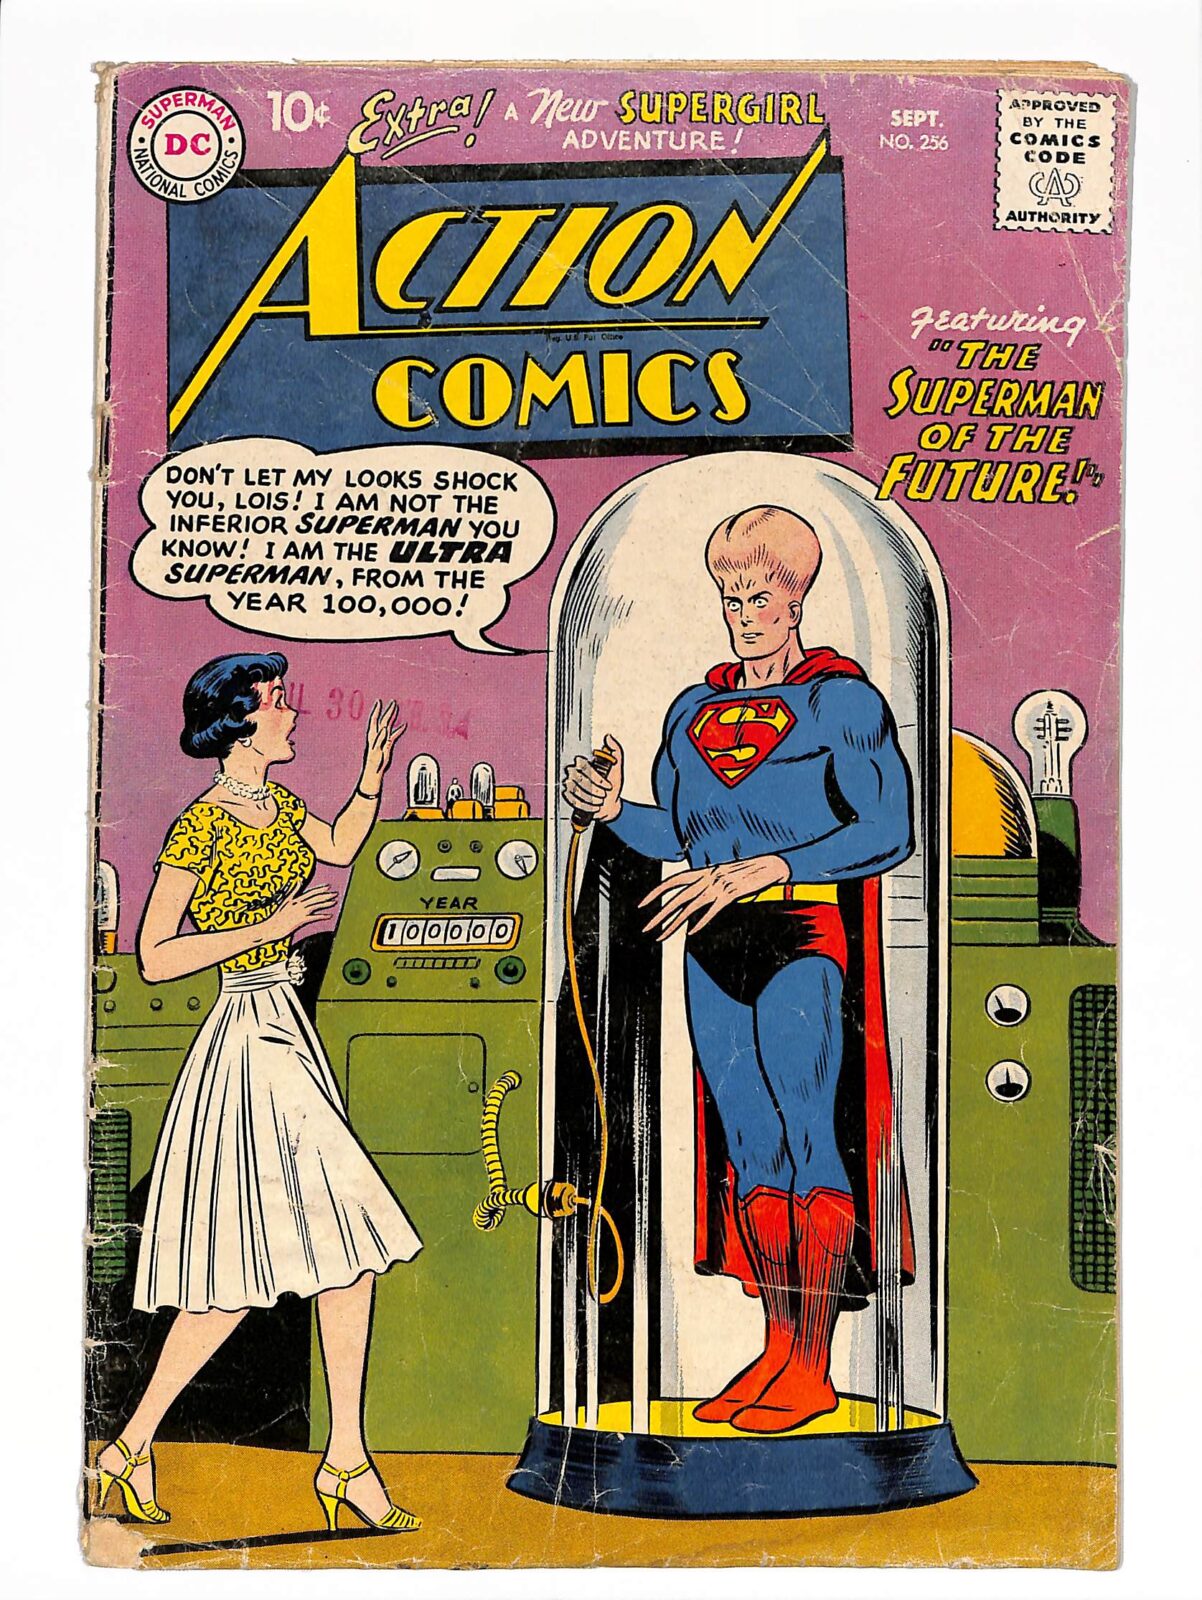 Action Comics #256